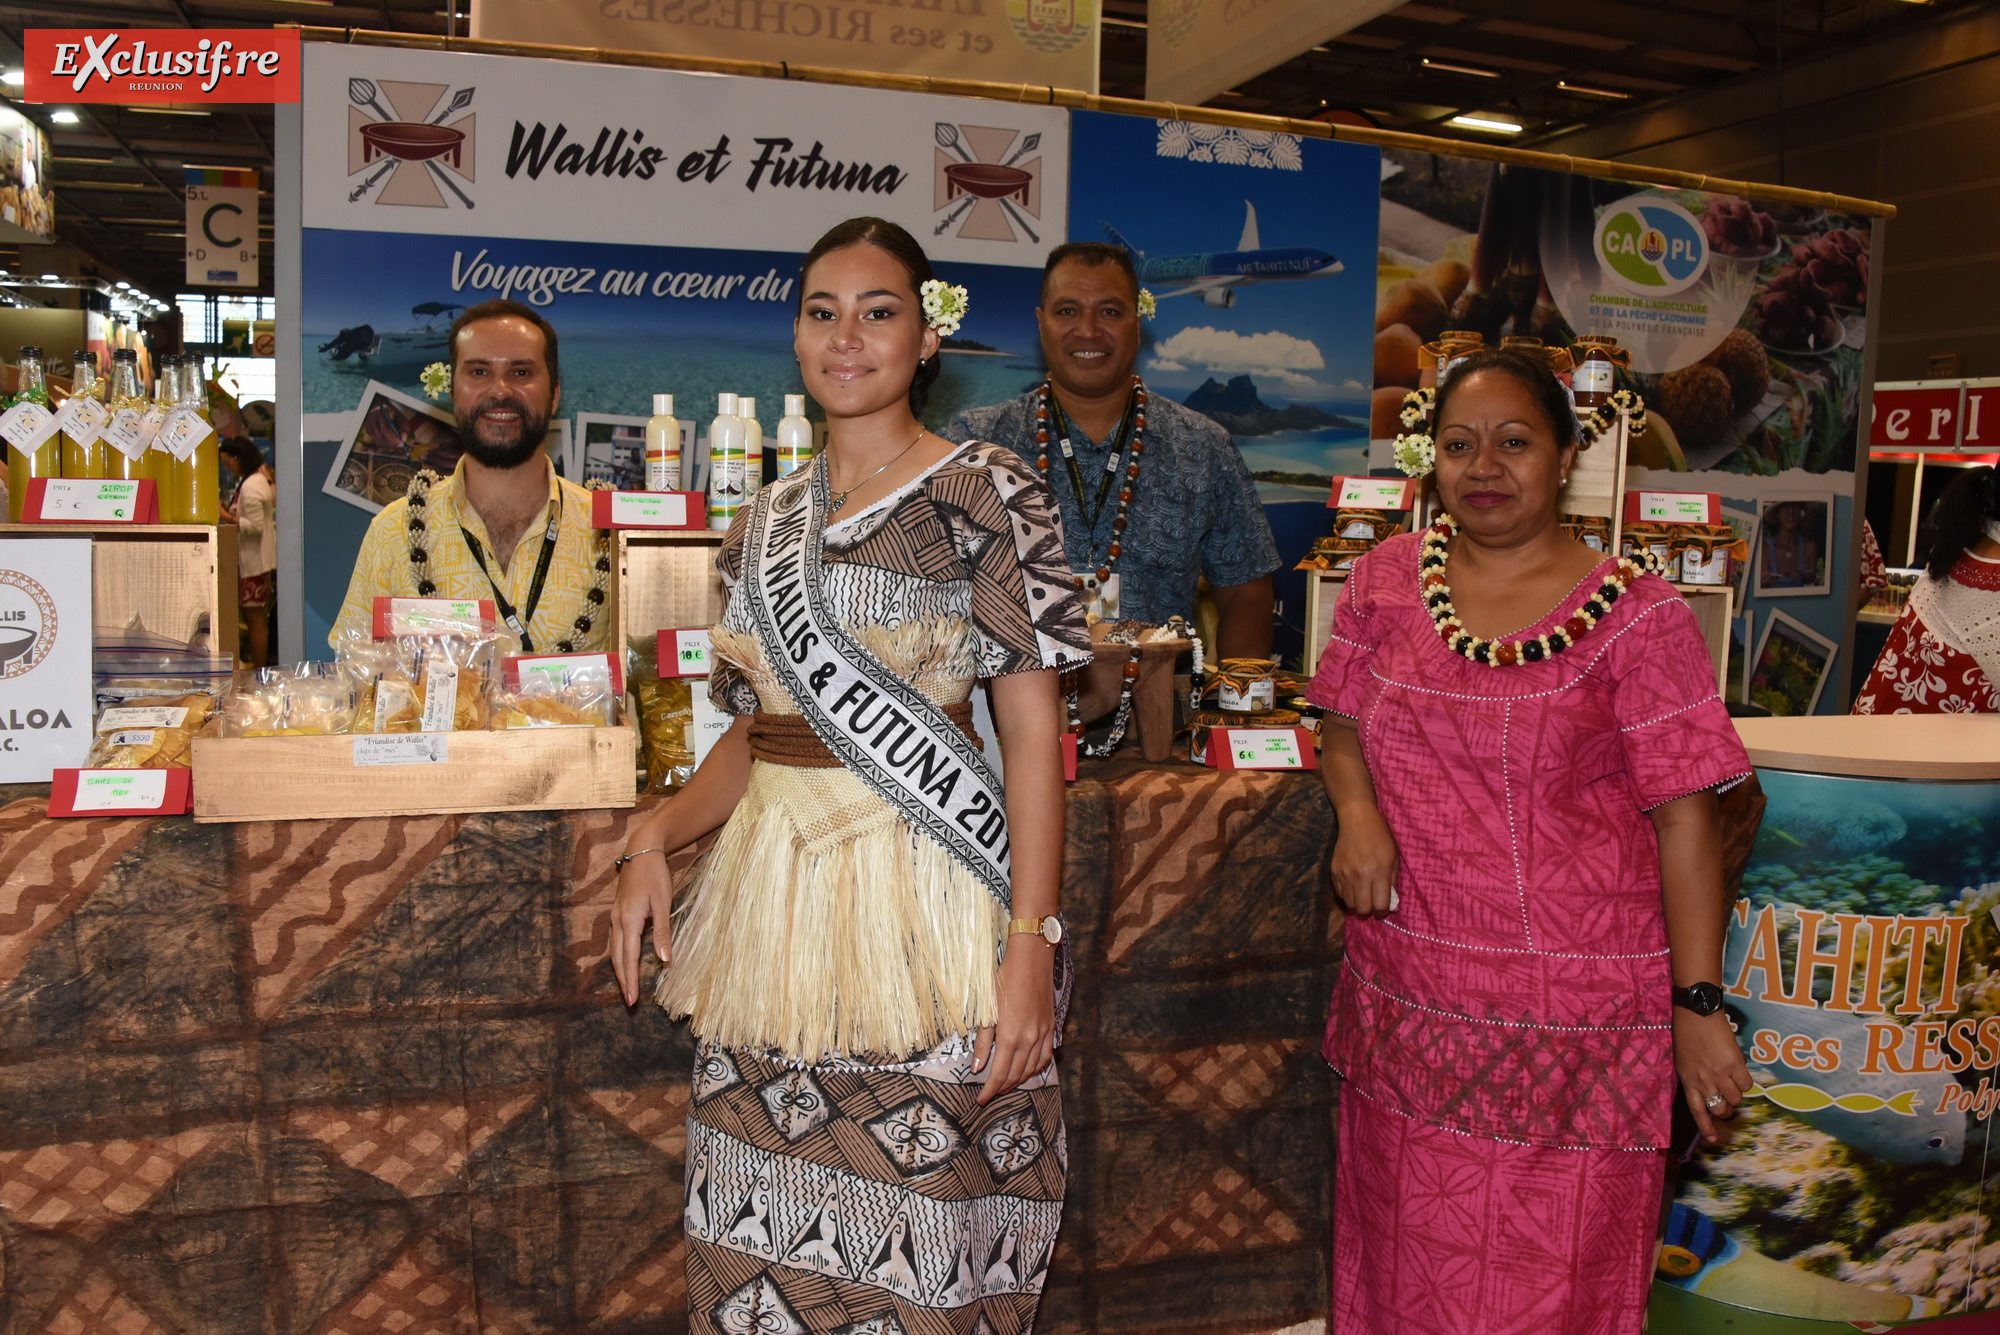 Stand de Wallis-et Futuna avec Miss Wallis et Futuna 2019, Violène Blondel. A gauche Denis Ehrsam